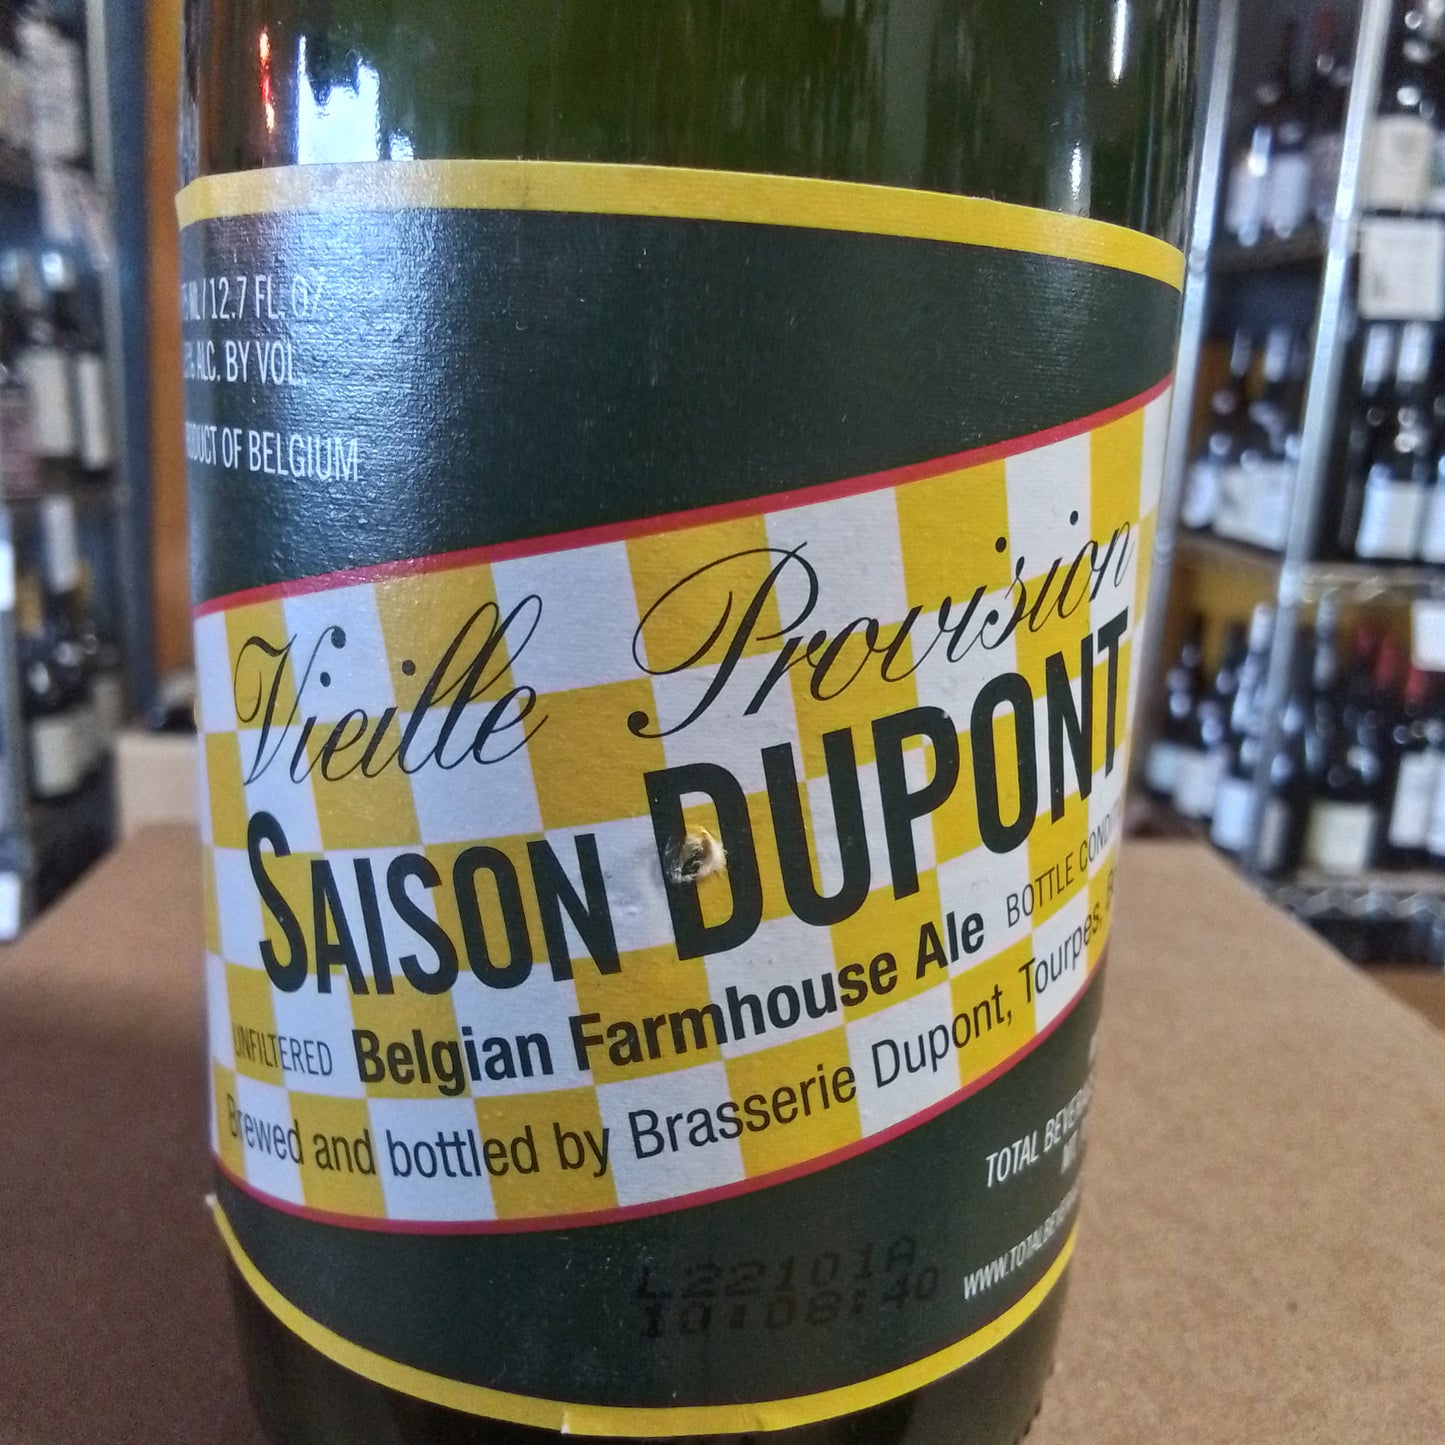 BRASSERIE DUPONT Belgium Farmhouse Ale 'Saison Dupont' (Hainaut, Belgium)